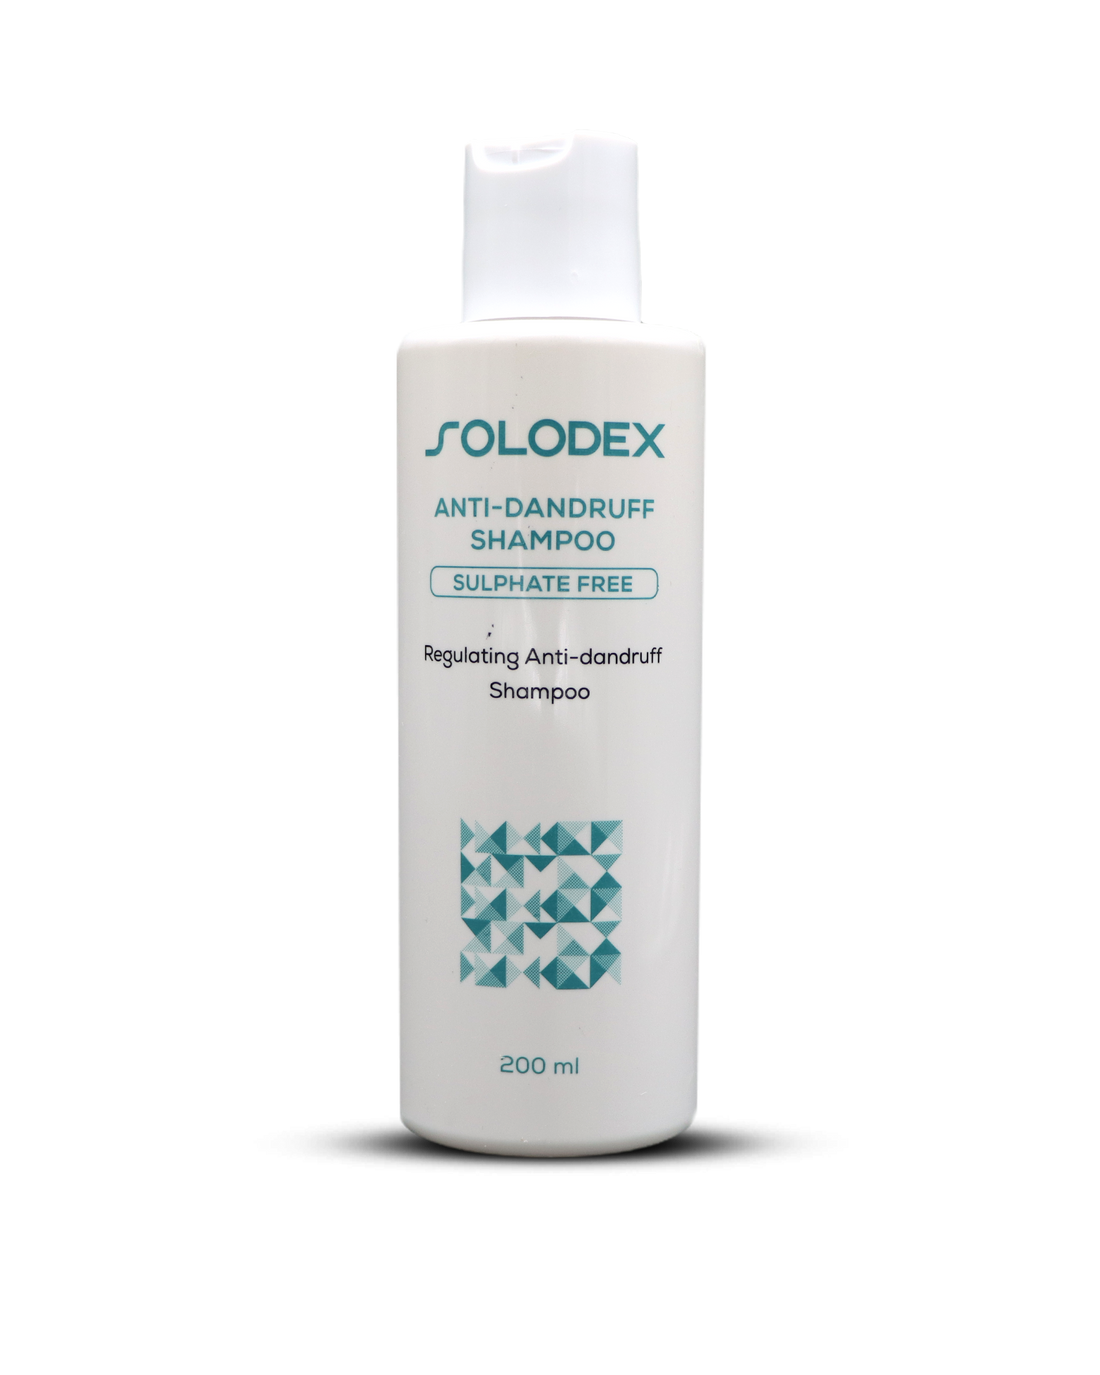 Solodex Anti-dandruff shampoo